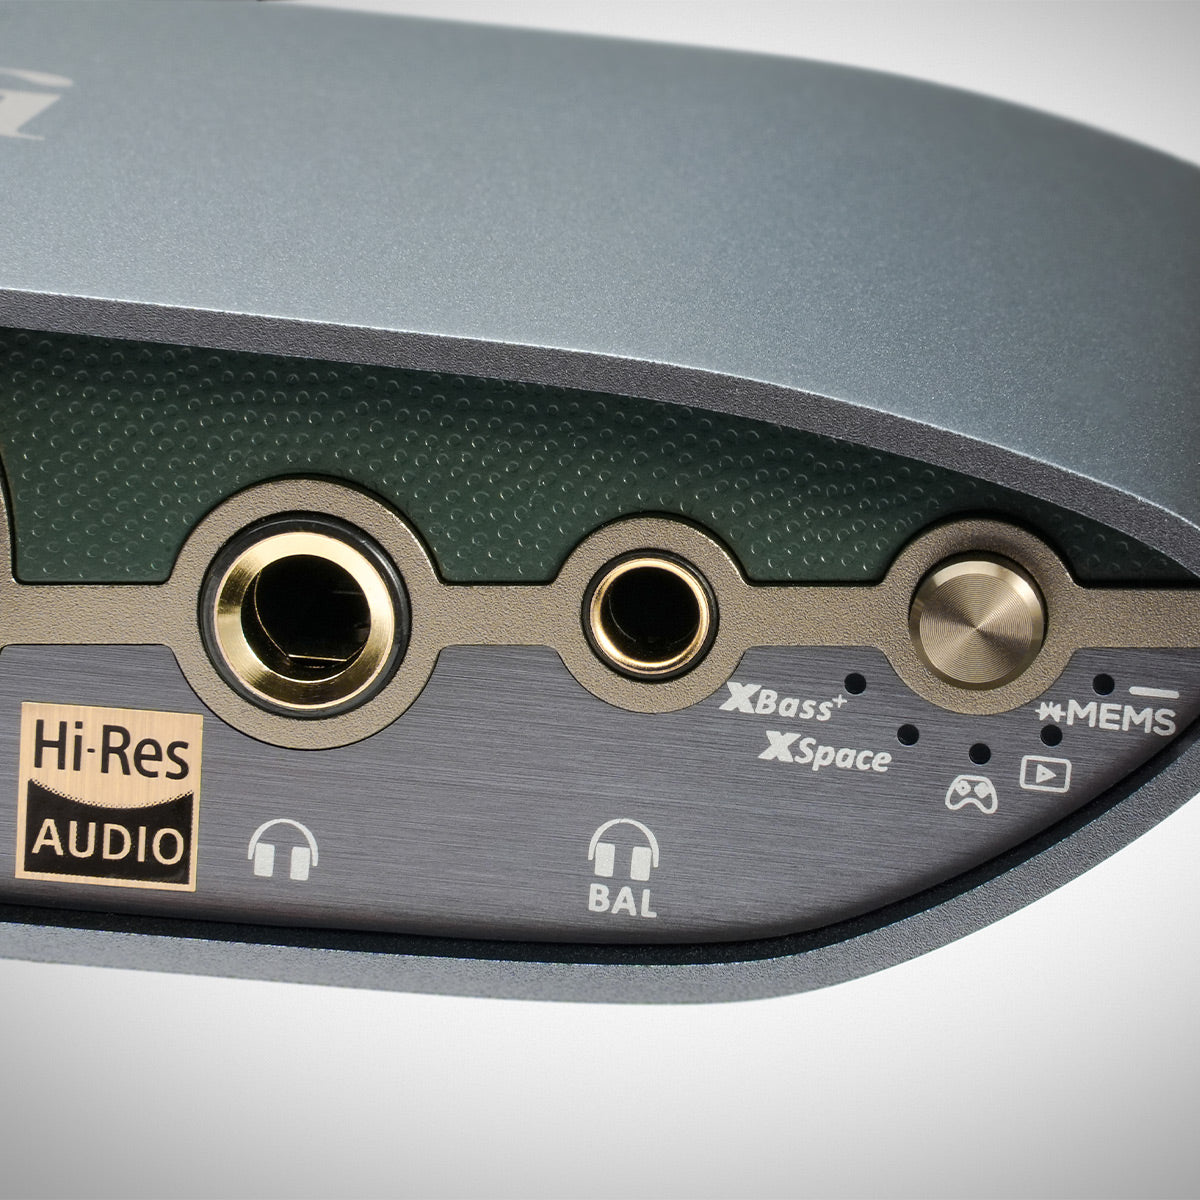 iFi Audio Zen Can 3 Analog Headphone Amplifier